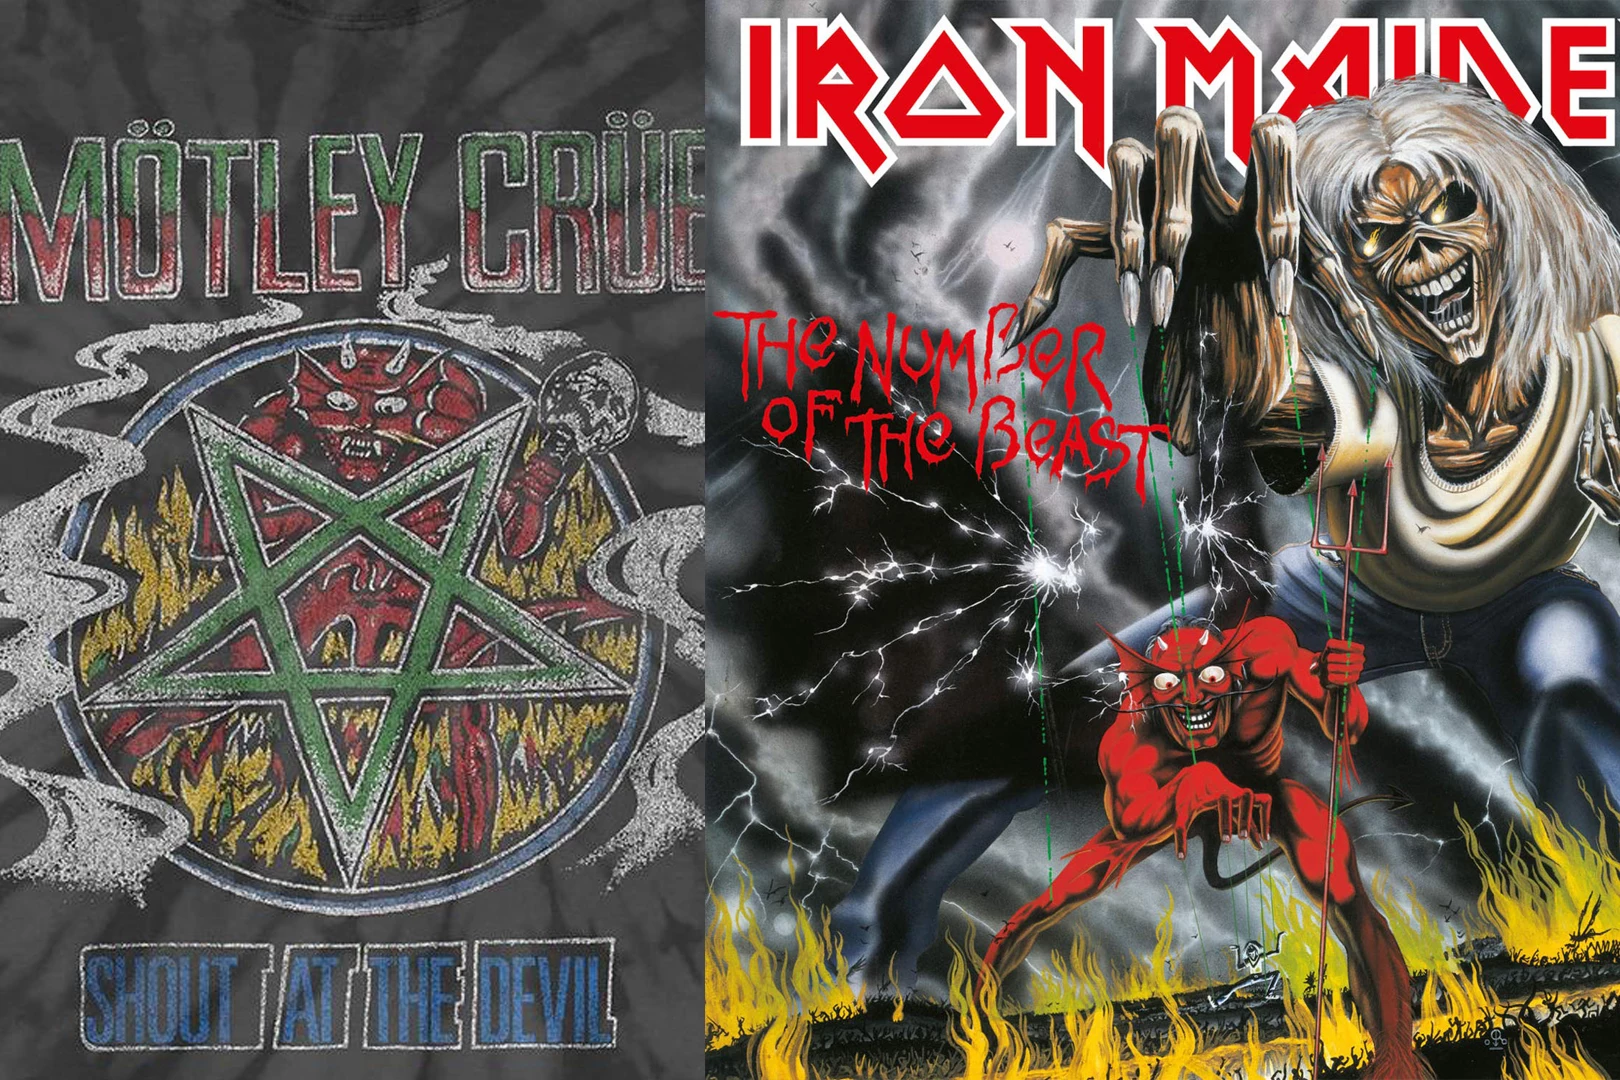 What's Iron Maiden Album Art Doing on a Motley Crue Shirt?